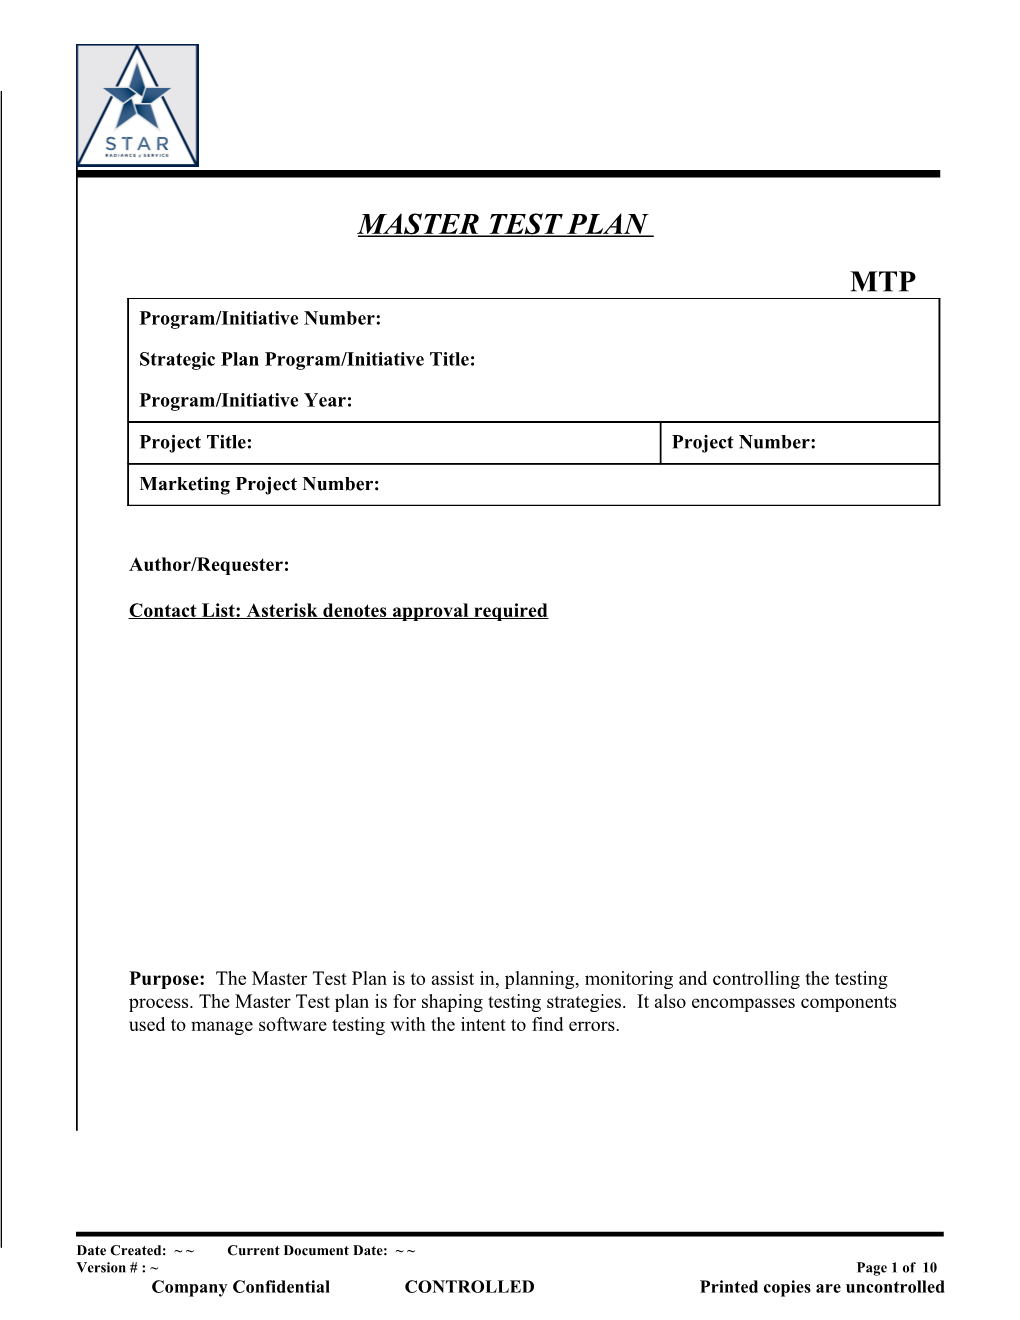 STAR, LLC Master Test Plan Template